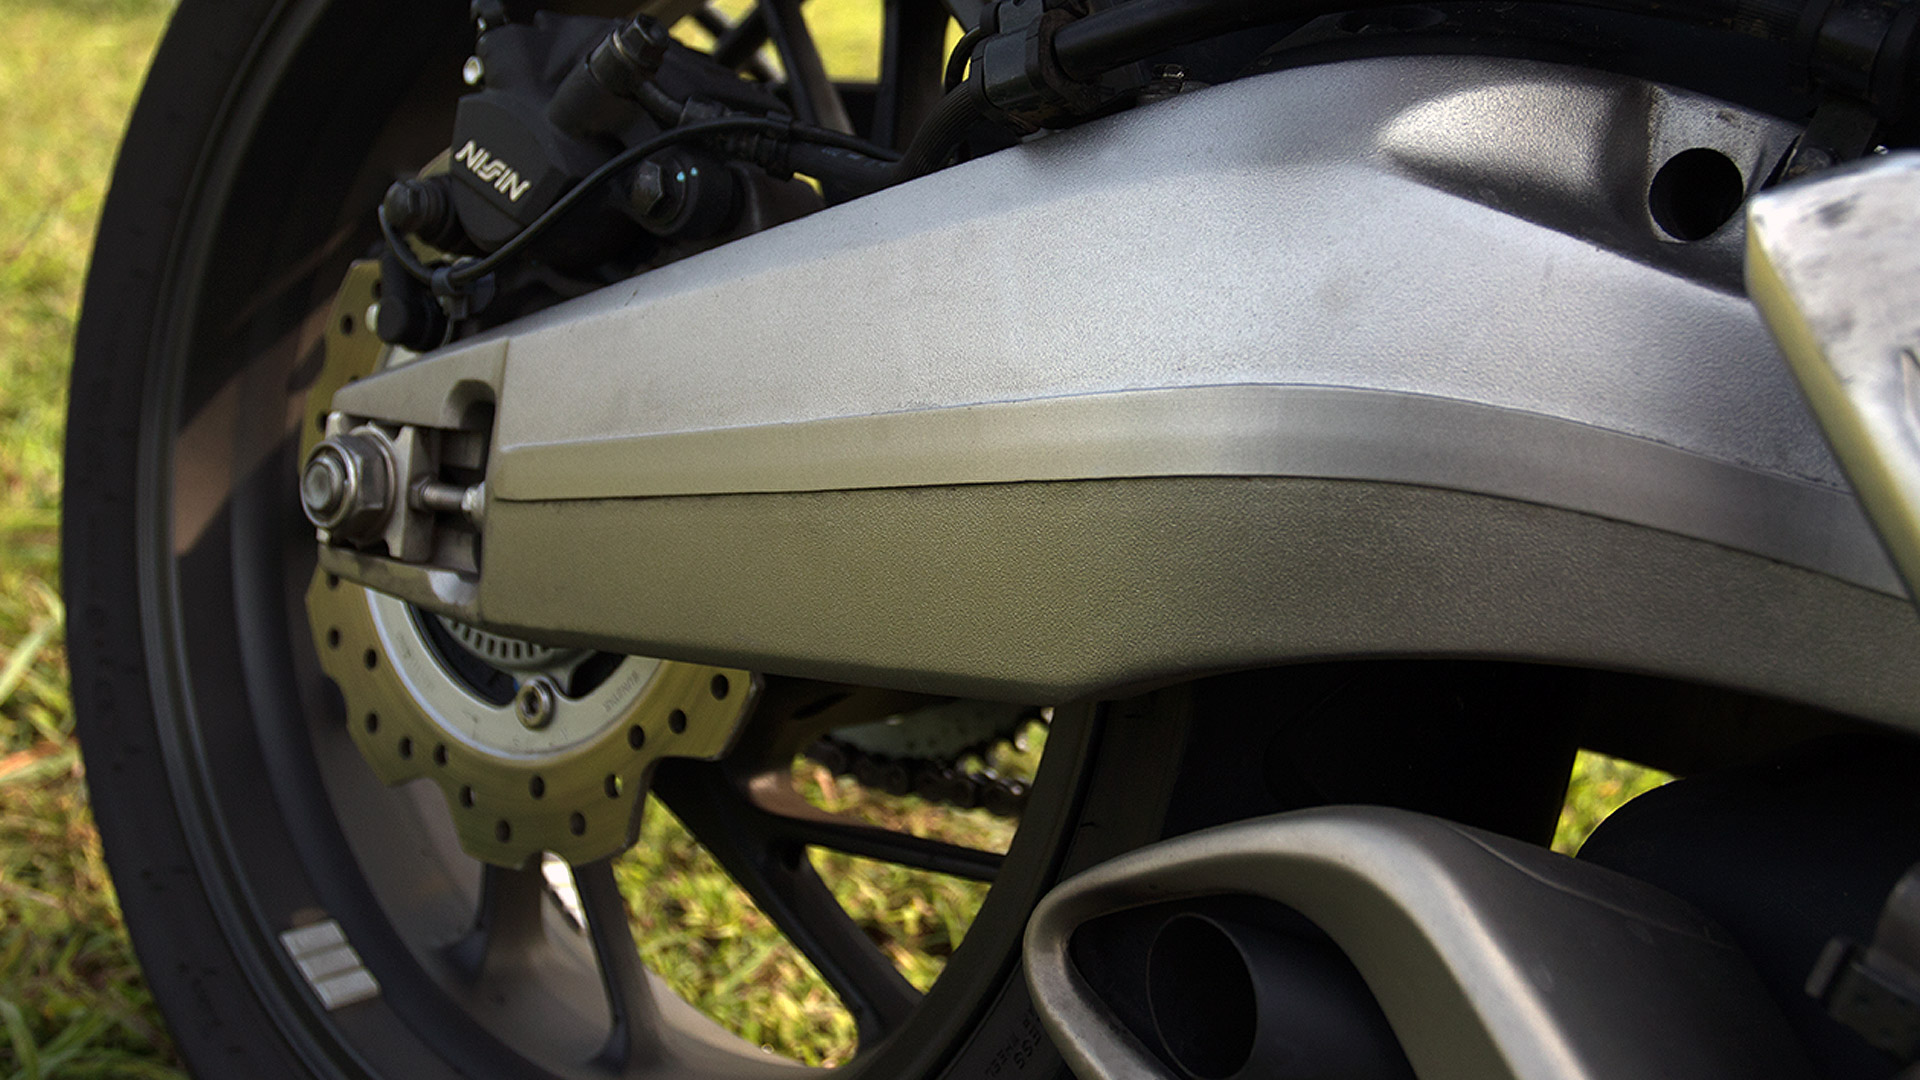 Honda CBR650F 2015 STD